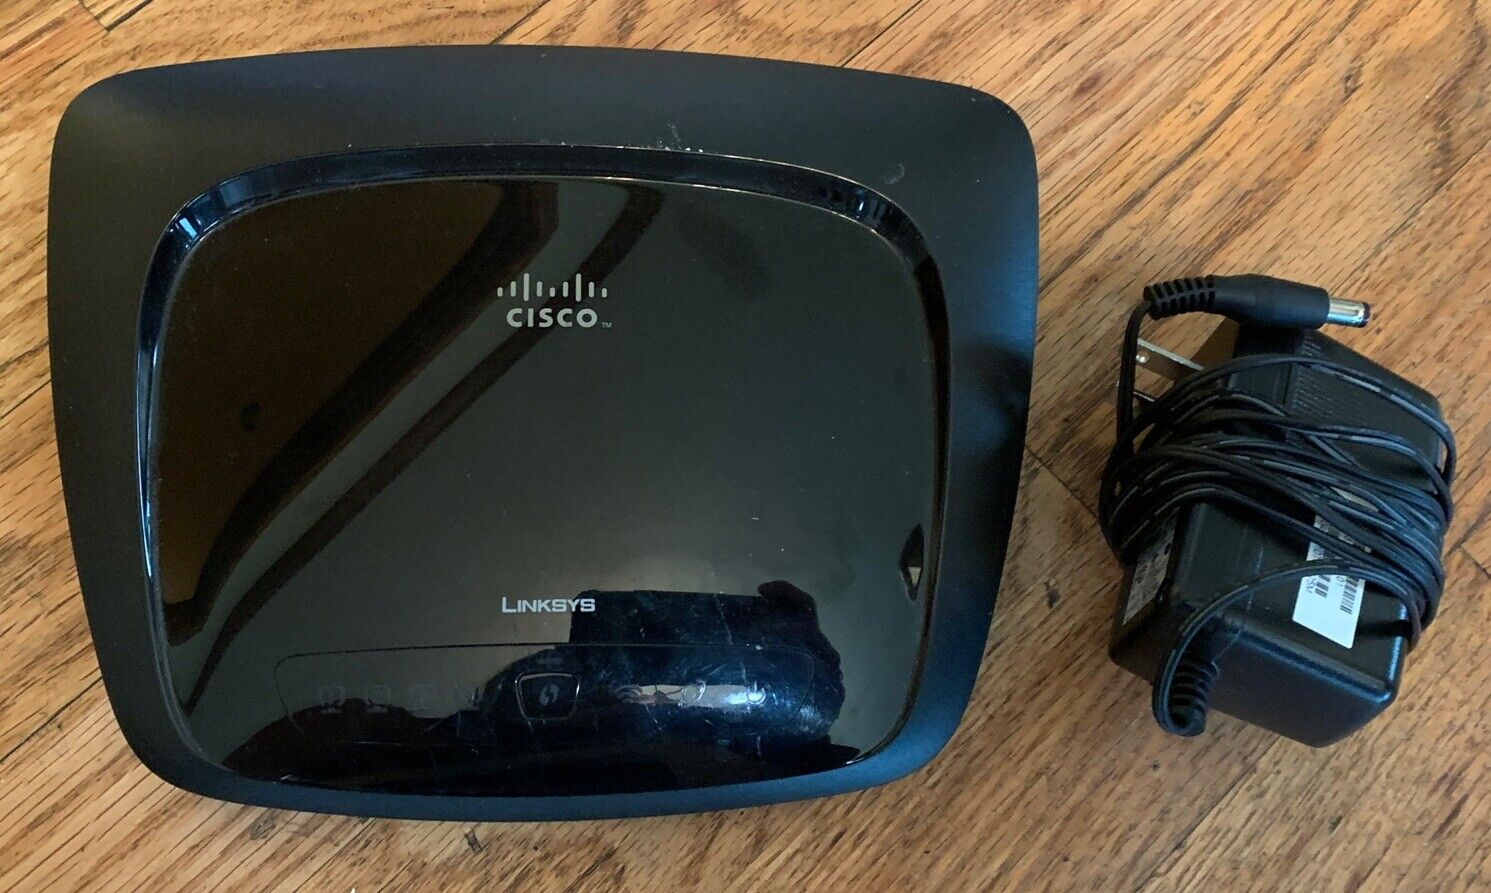 Linksys Cisco WRT110 RangePlus Wireless Router works on Comcast/Spectrum